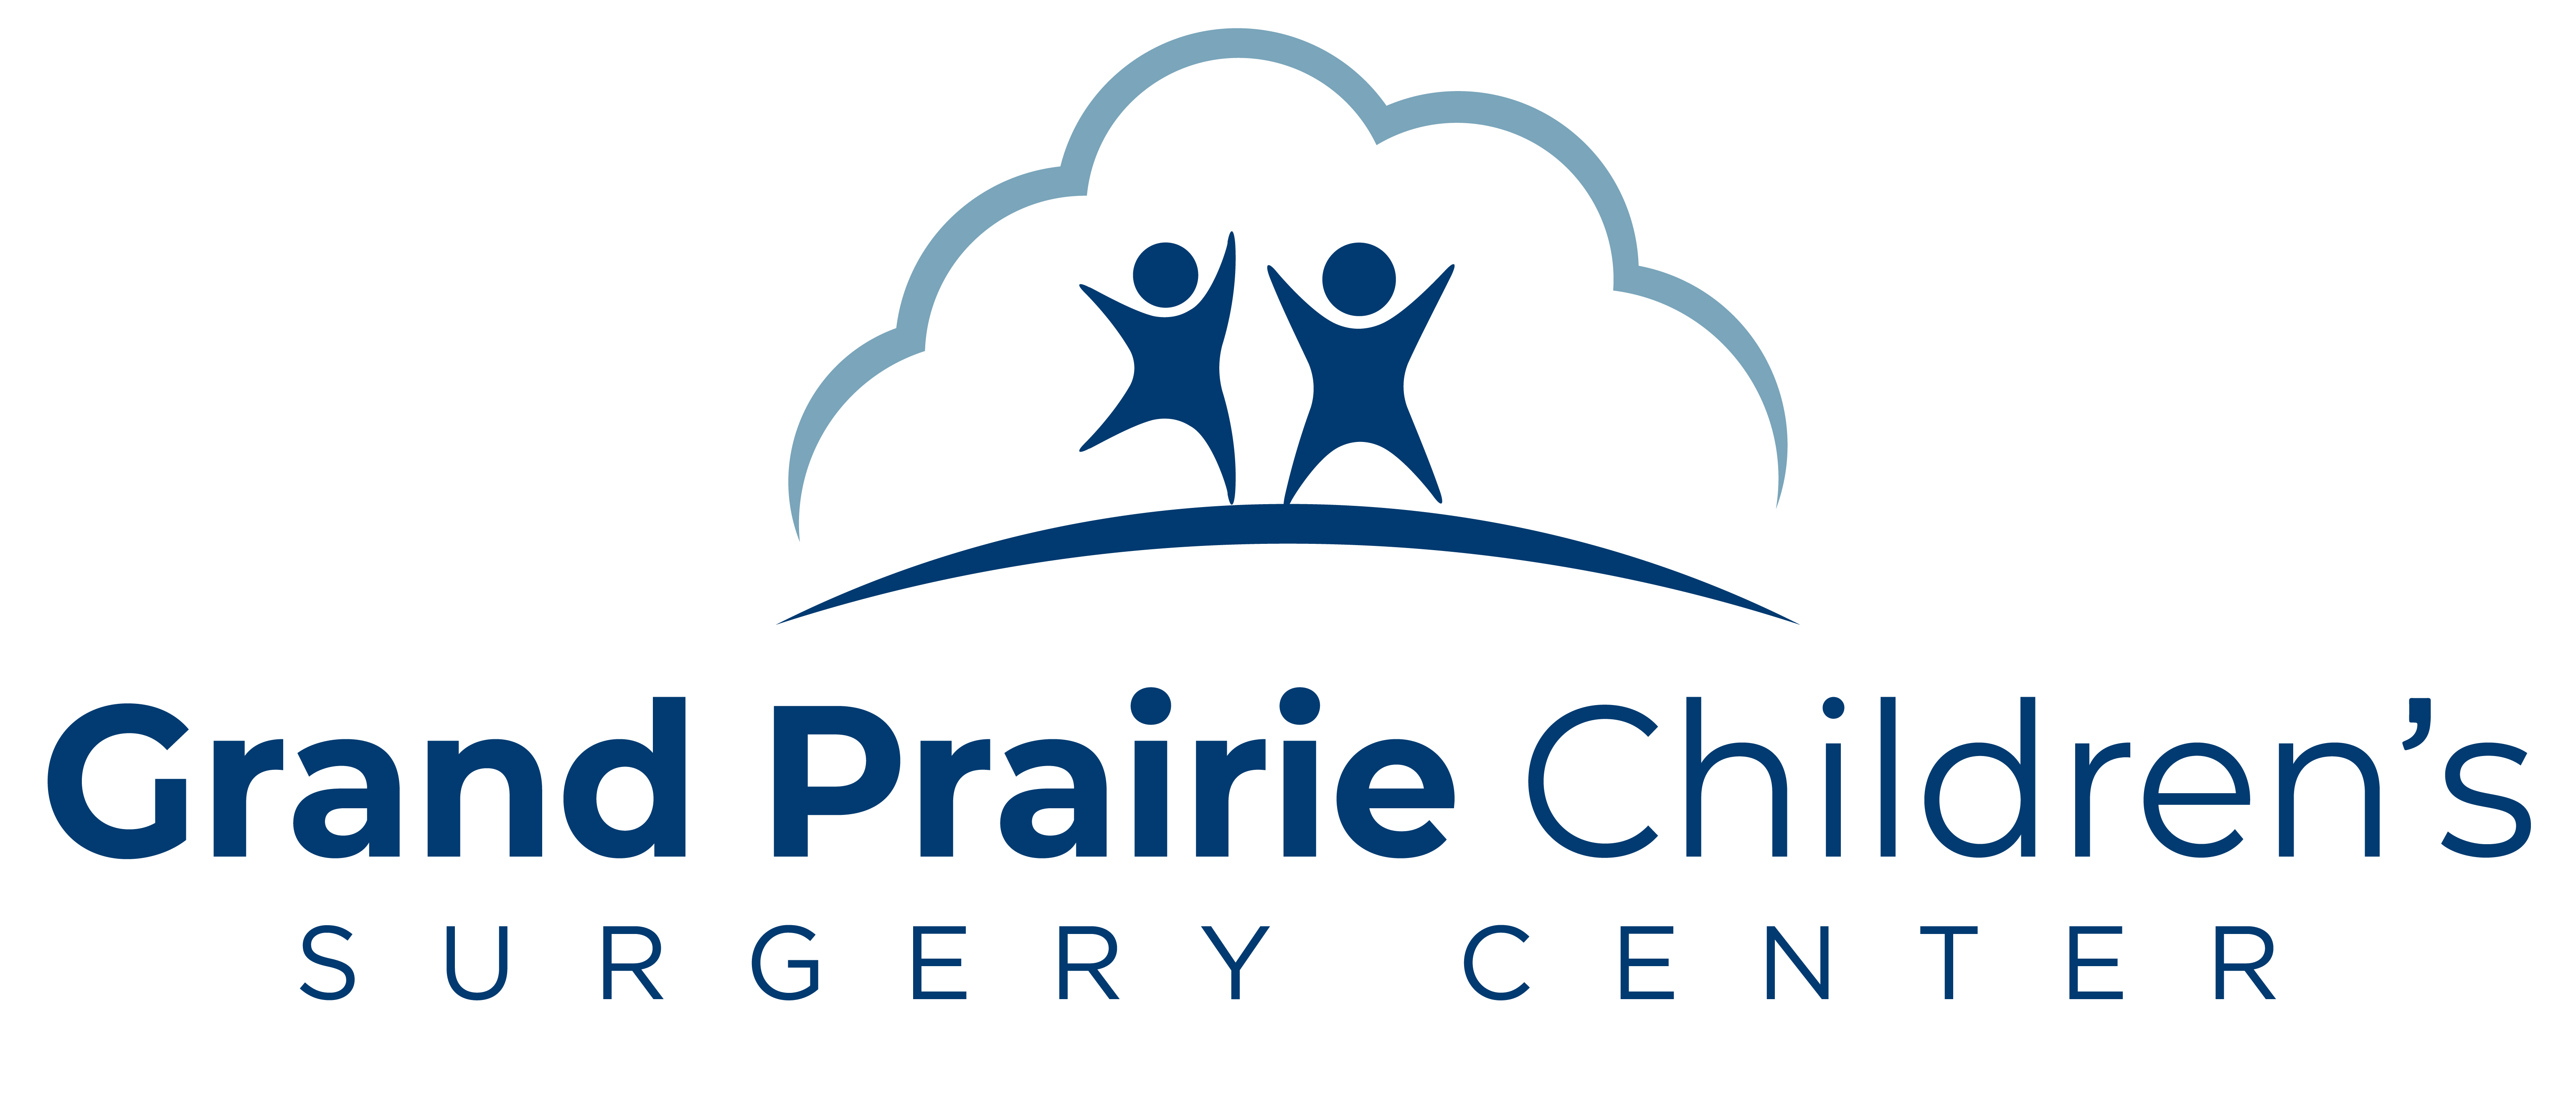 Grand Prairie Children's Surgery Center